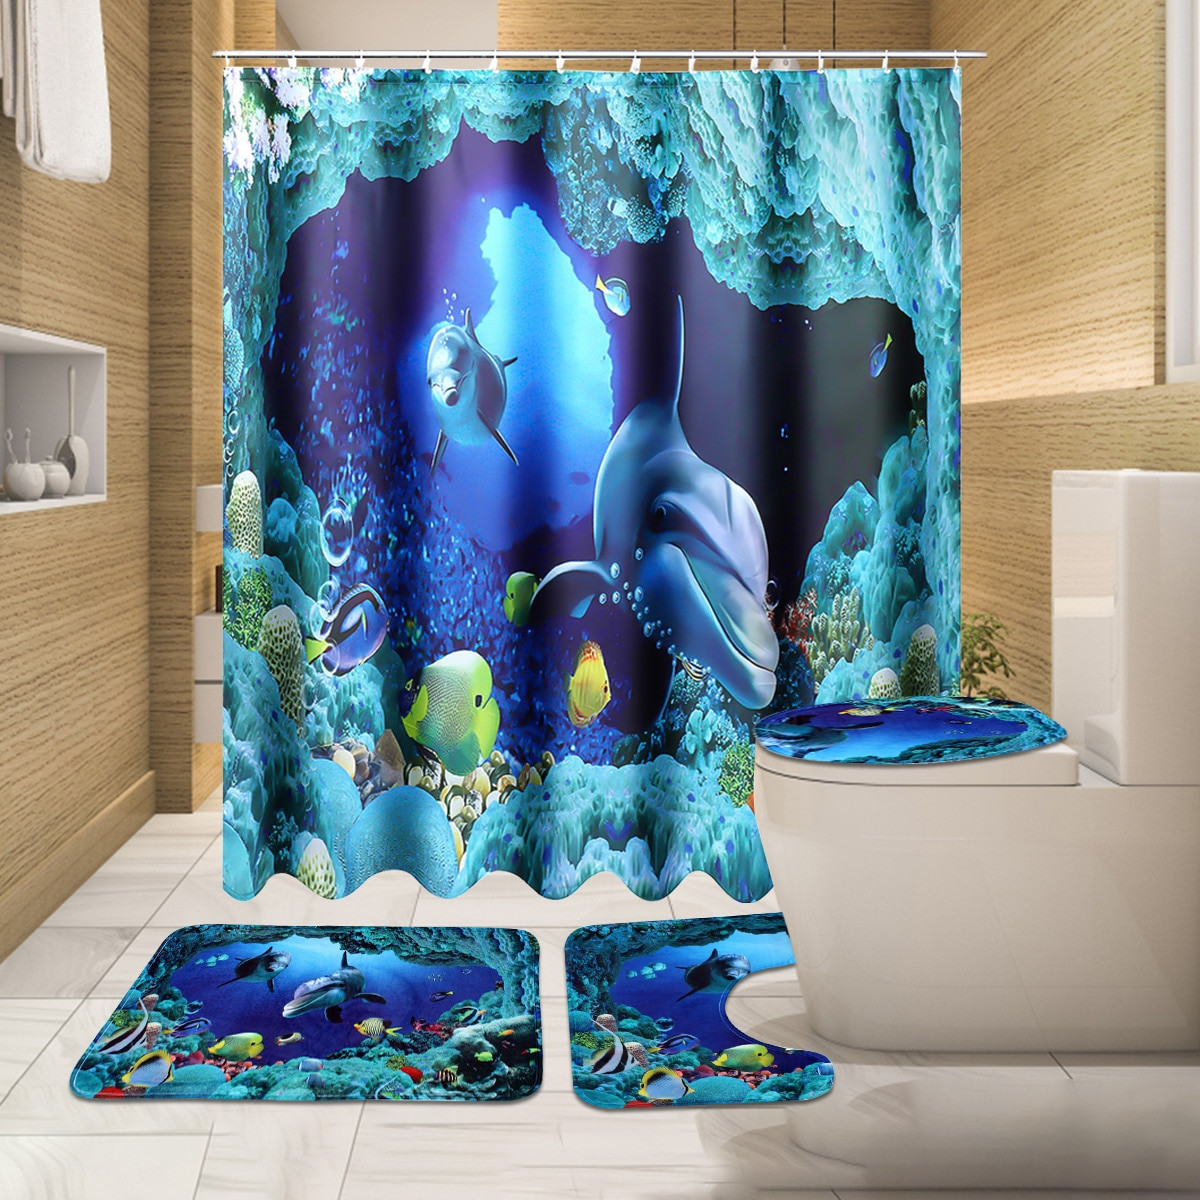 Bathroom Sets With Shower Curtain
 Blue Ocean Dolphin Bathroom Shower Curtain Waterproof Bath